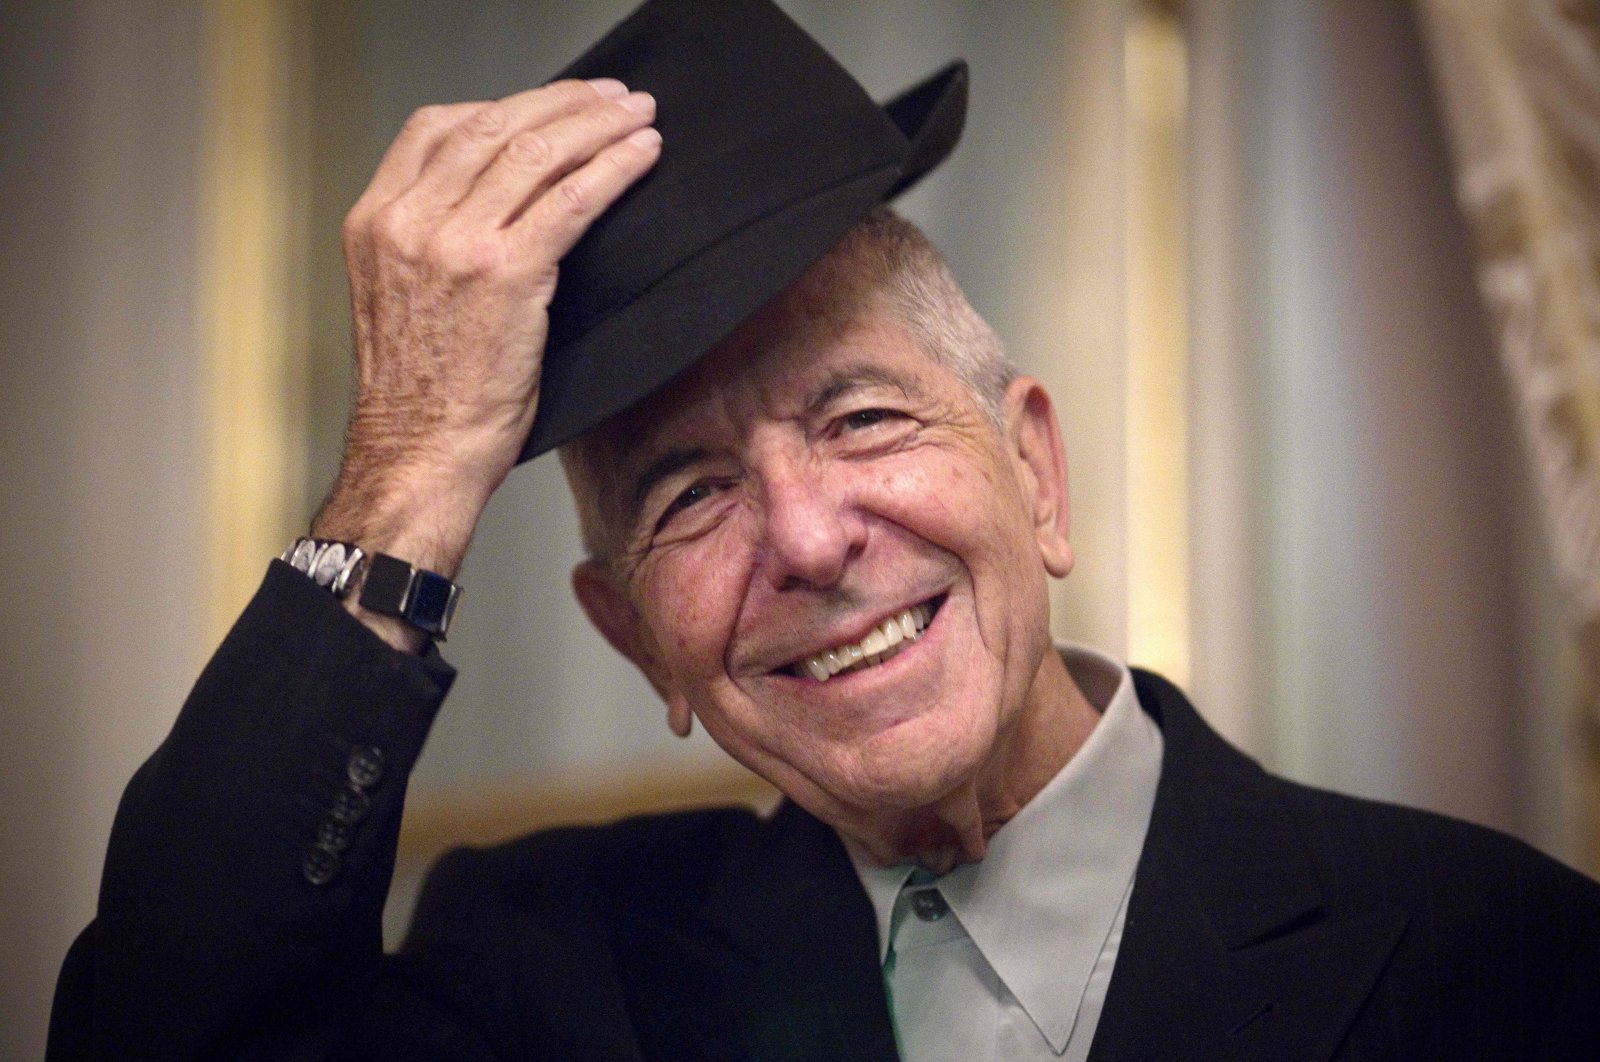 Hipgnosis membeli seluruh katalog Leonard Cohen